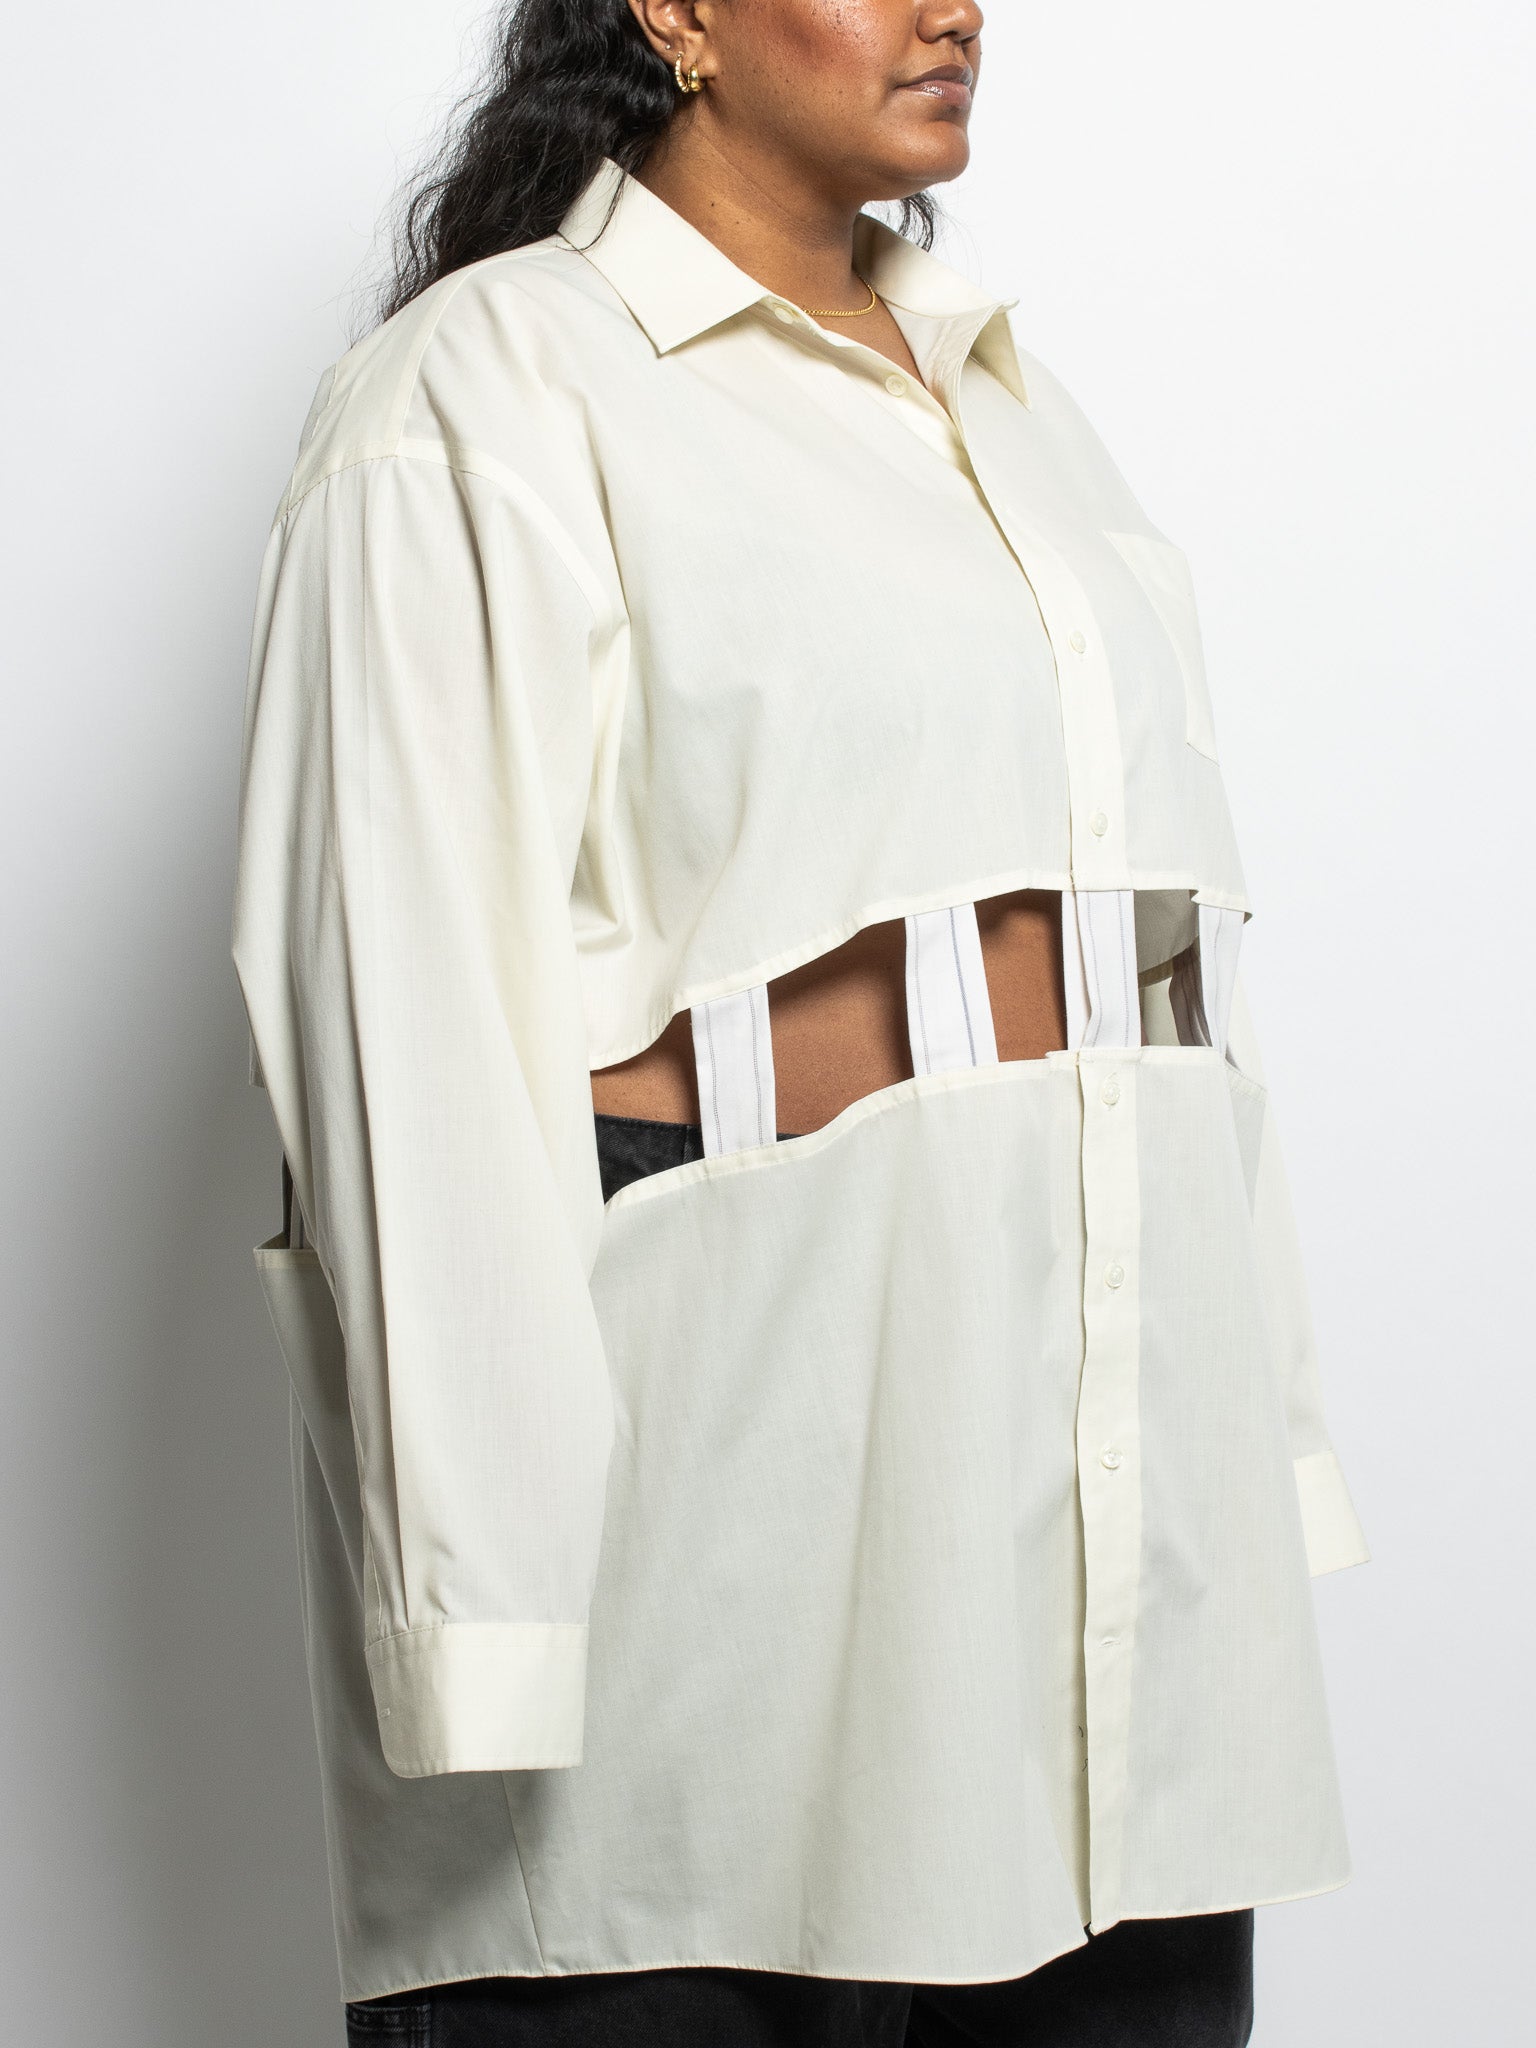 Laurs Kemp x BRZ - White Lattice Shirt (4X)